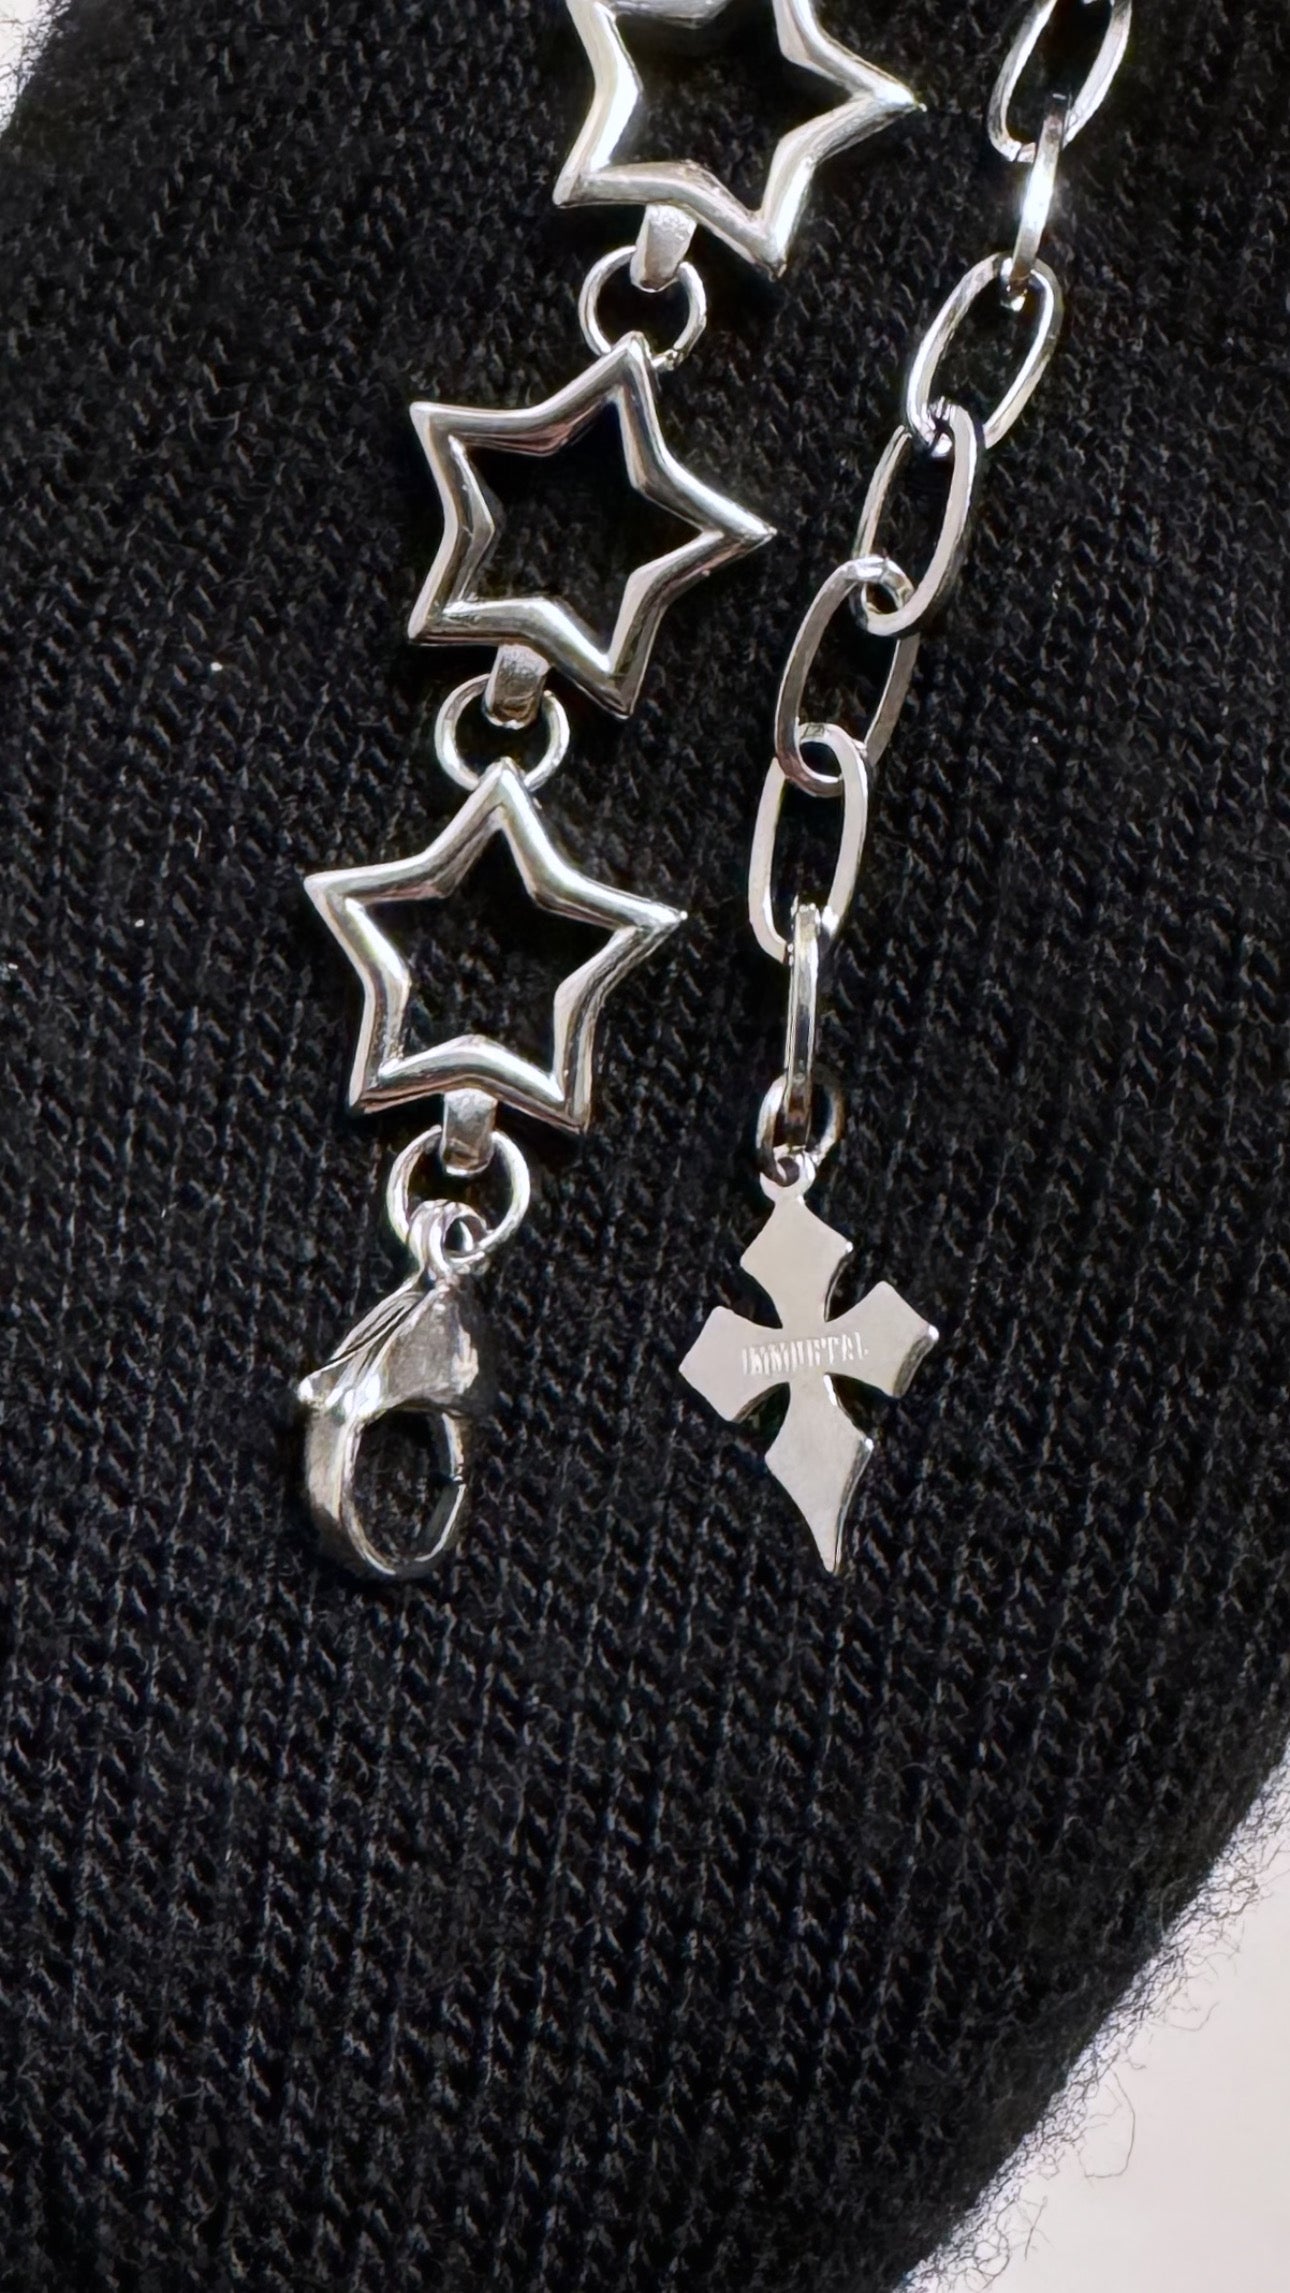 Star Struck Necklace